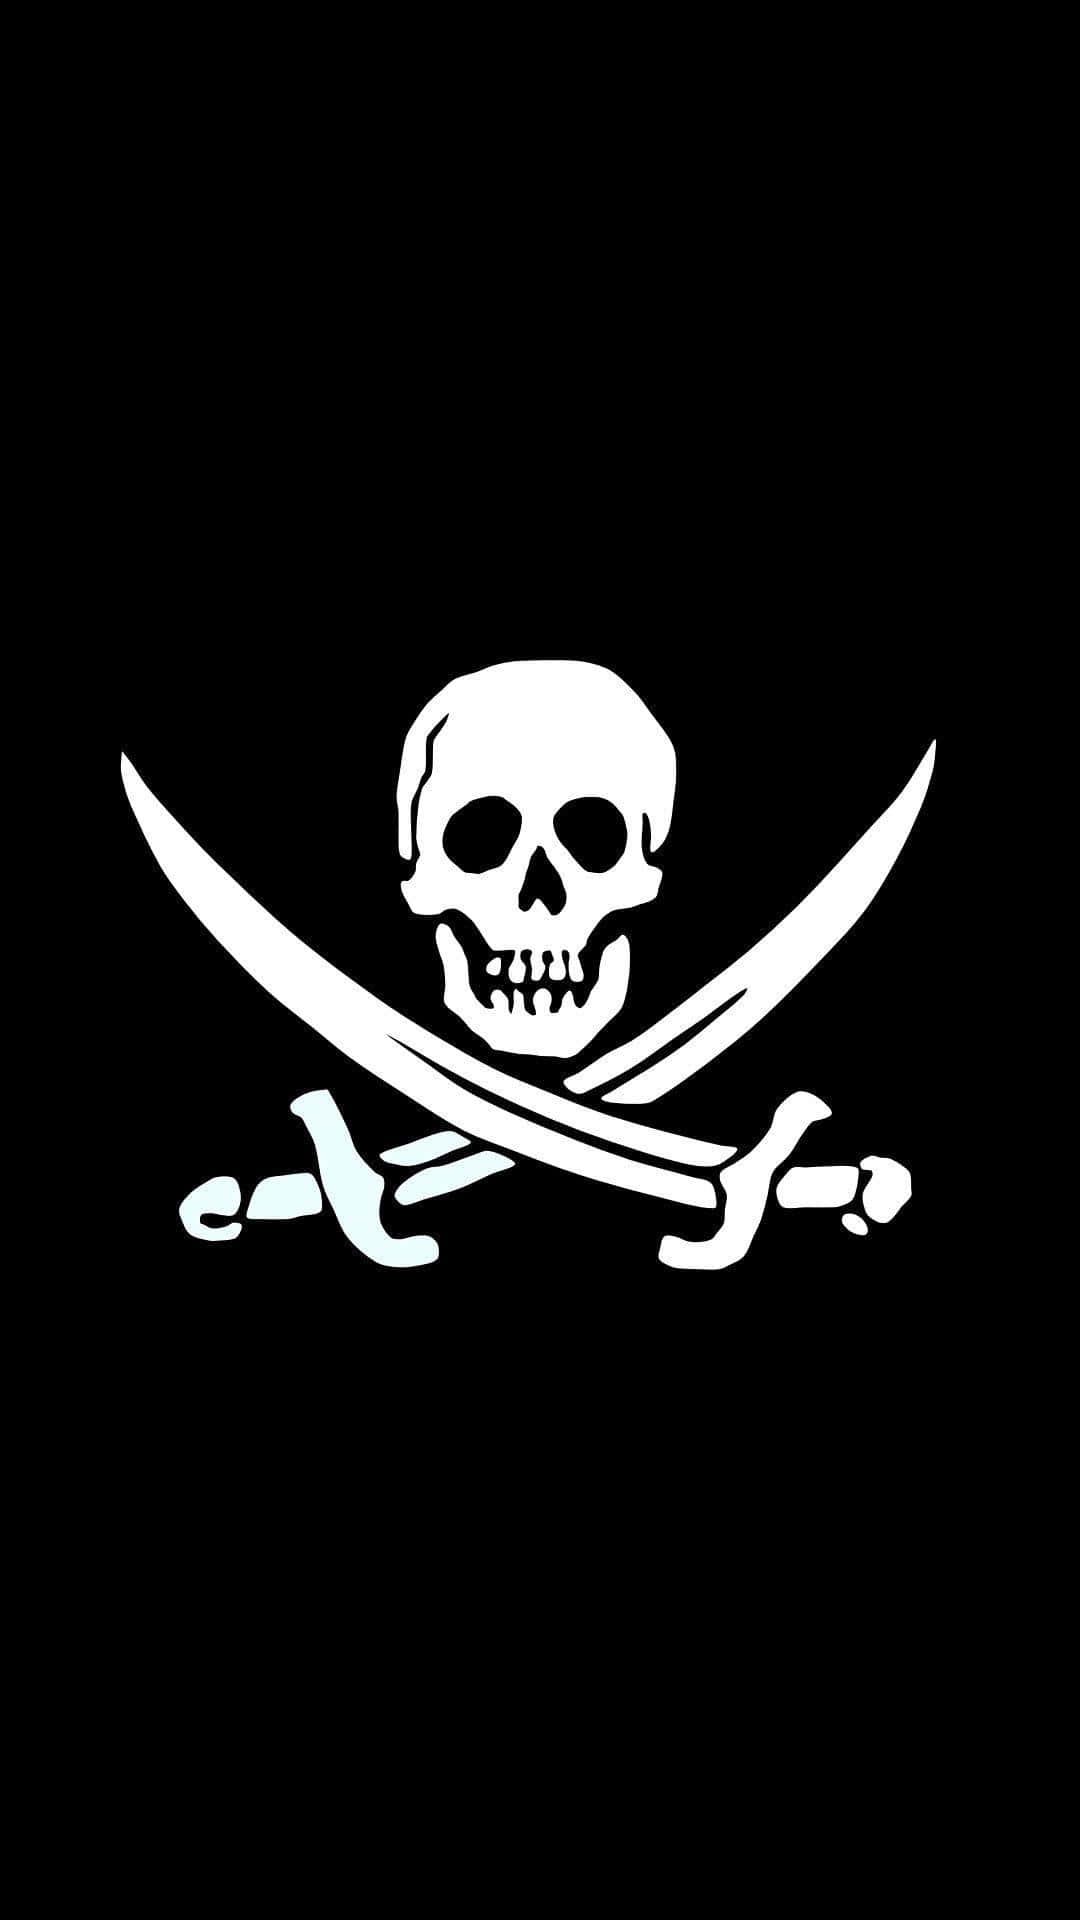 Pirate Skull And Crossbones On Black Background Wallpaper